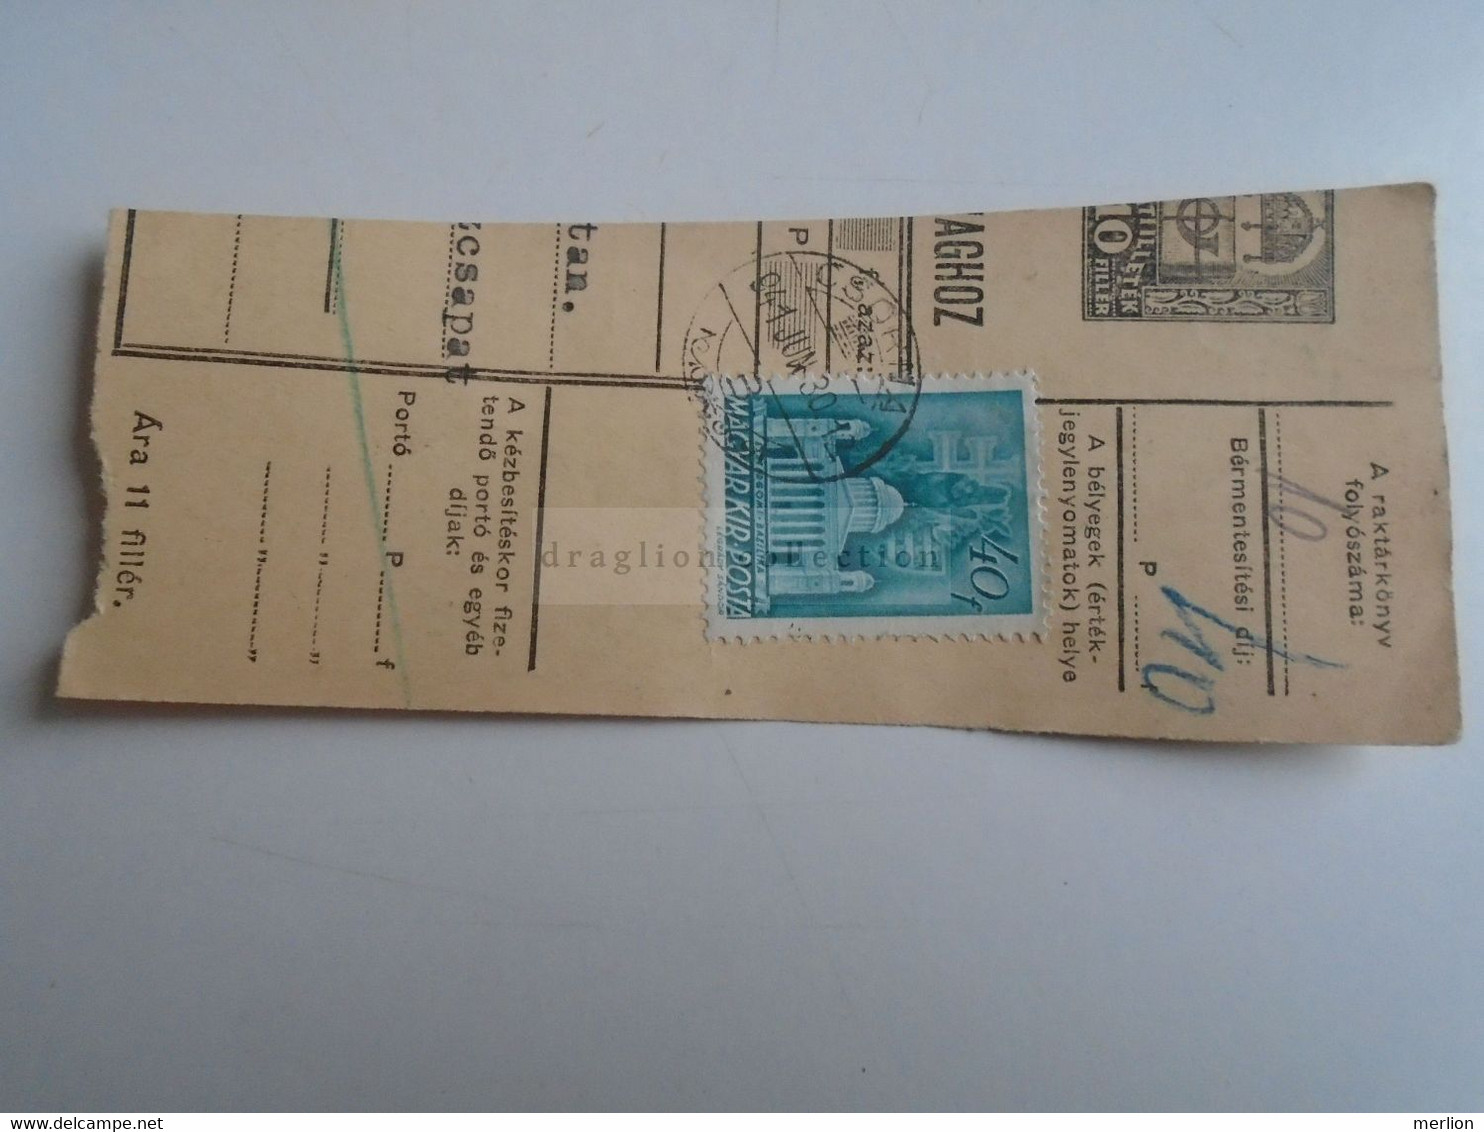 D187435   Parcel Card  (cut) Hungary 1941 CSORNA  -Kapuvár - Parcel Post